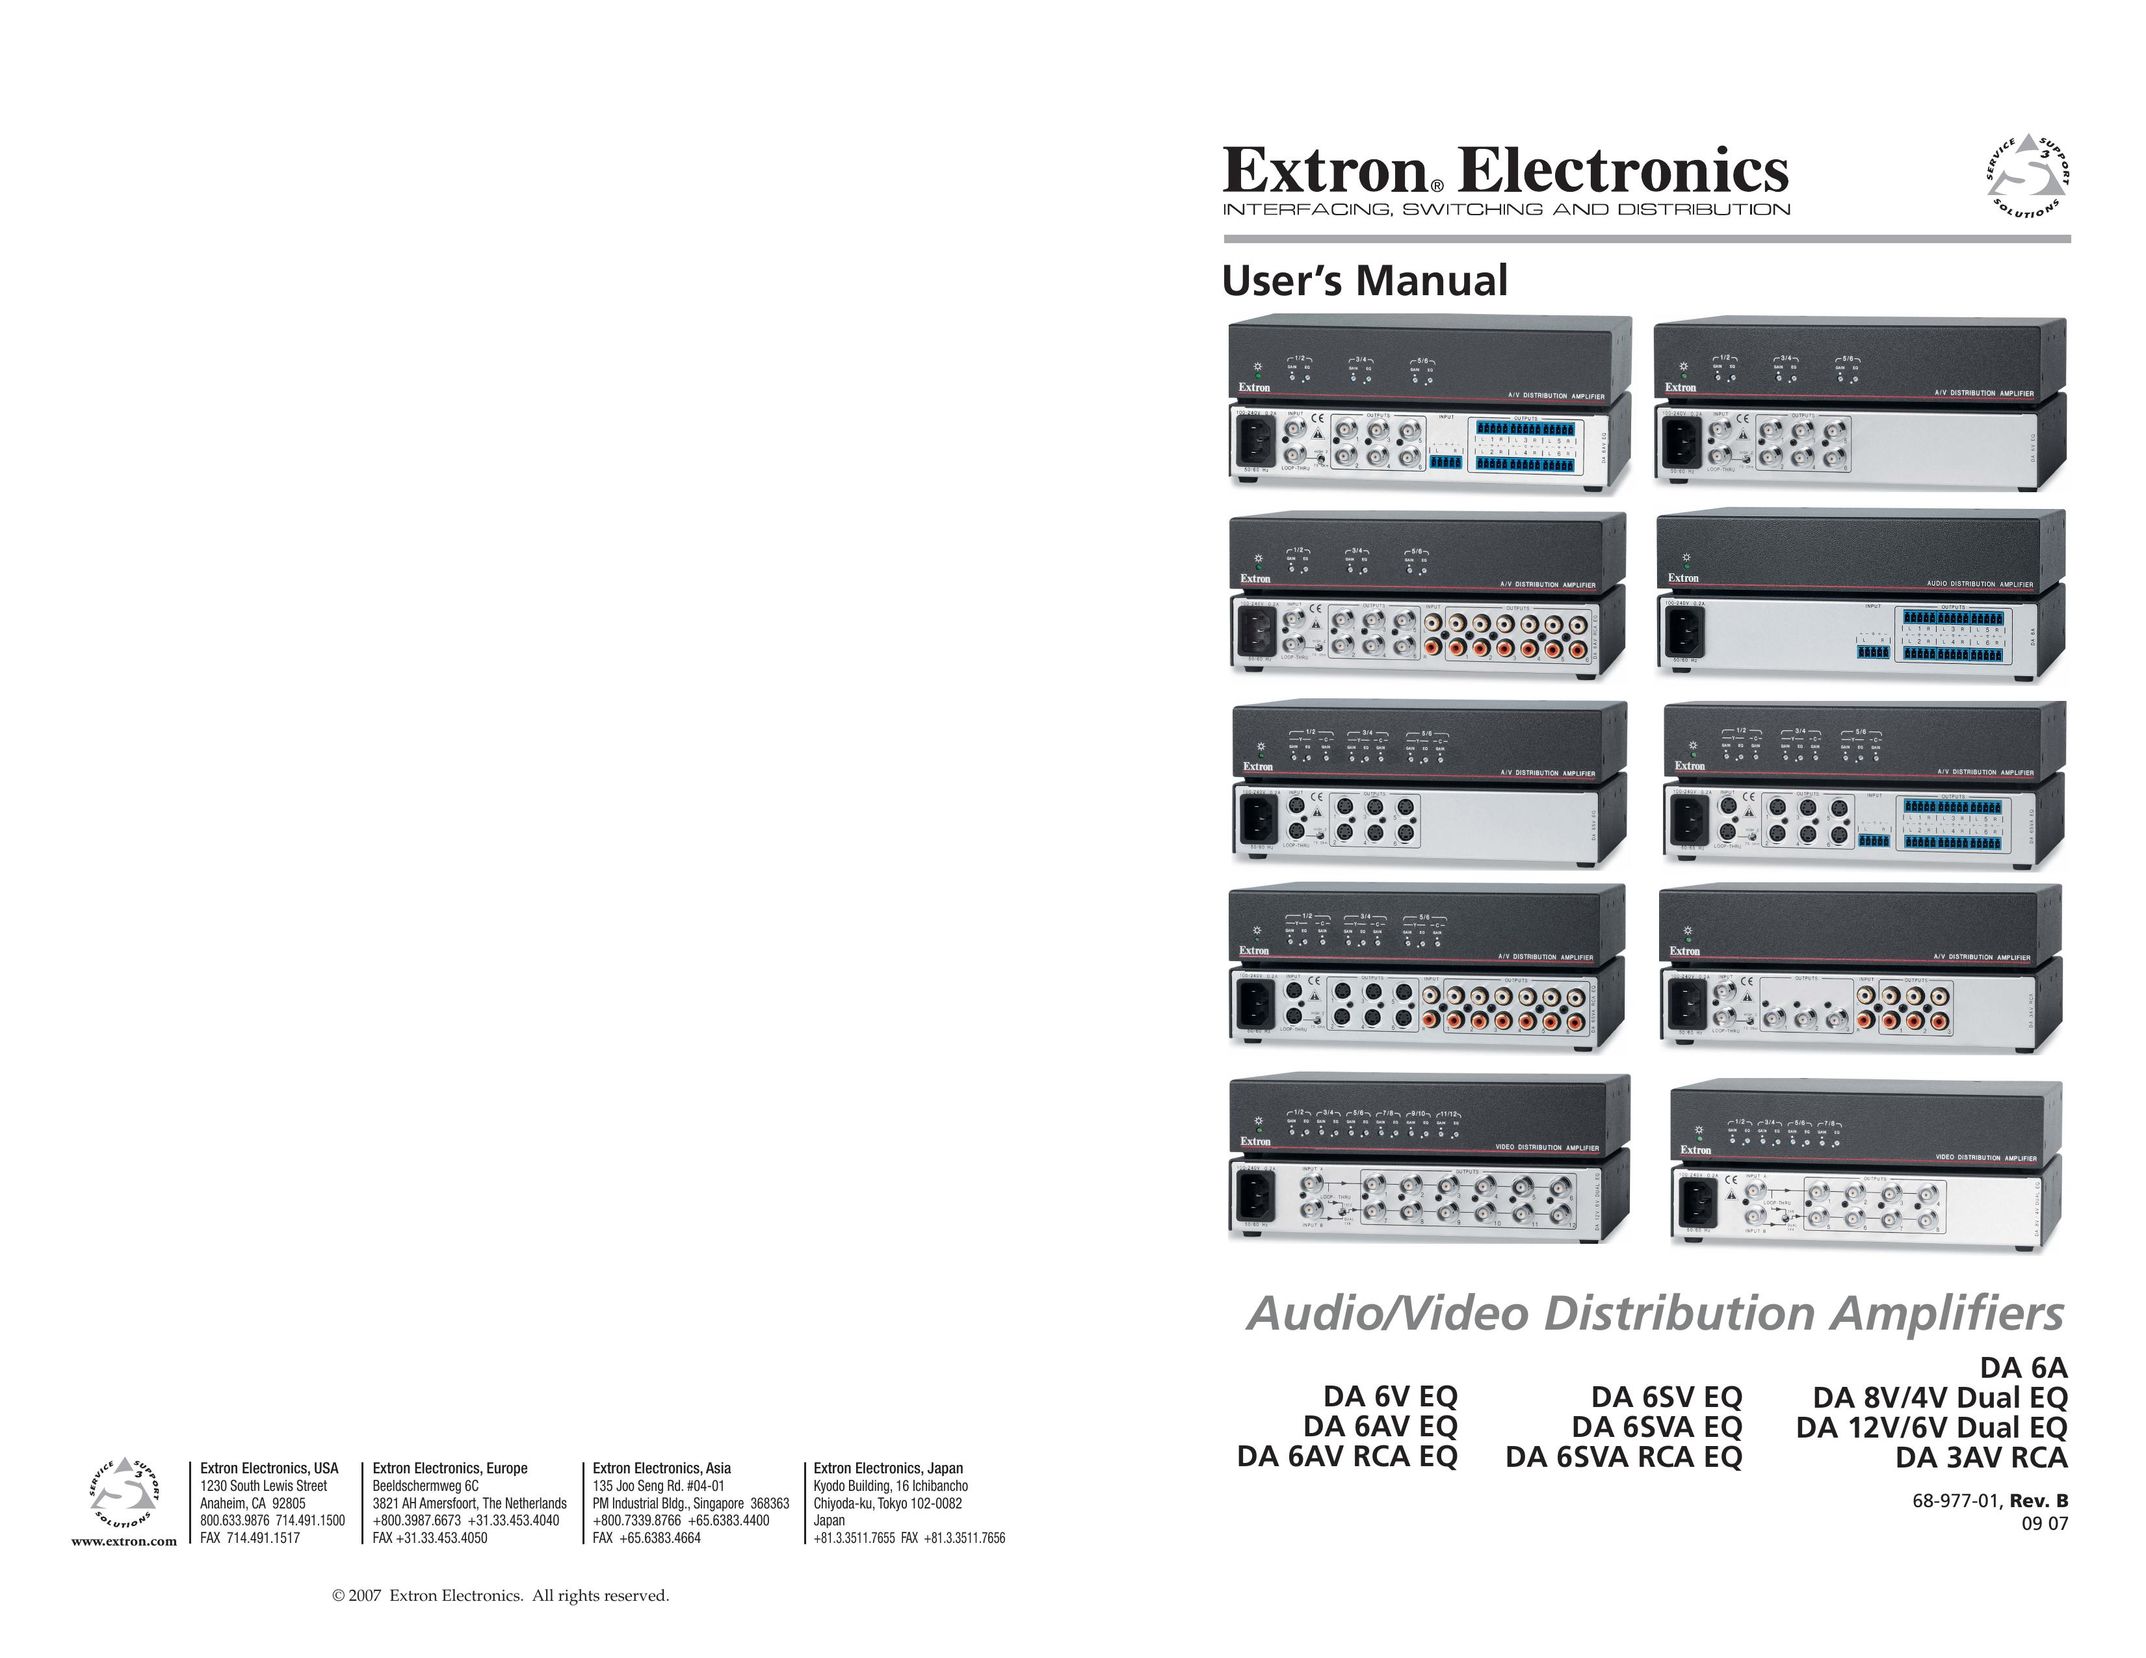 Extron electronic DA 6SV EQ Stereo Amplifier User Manual